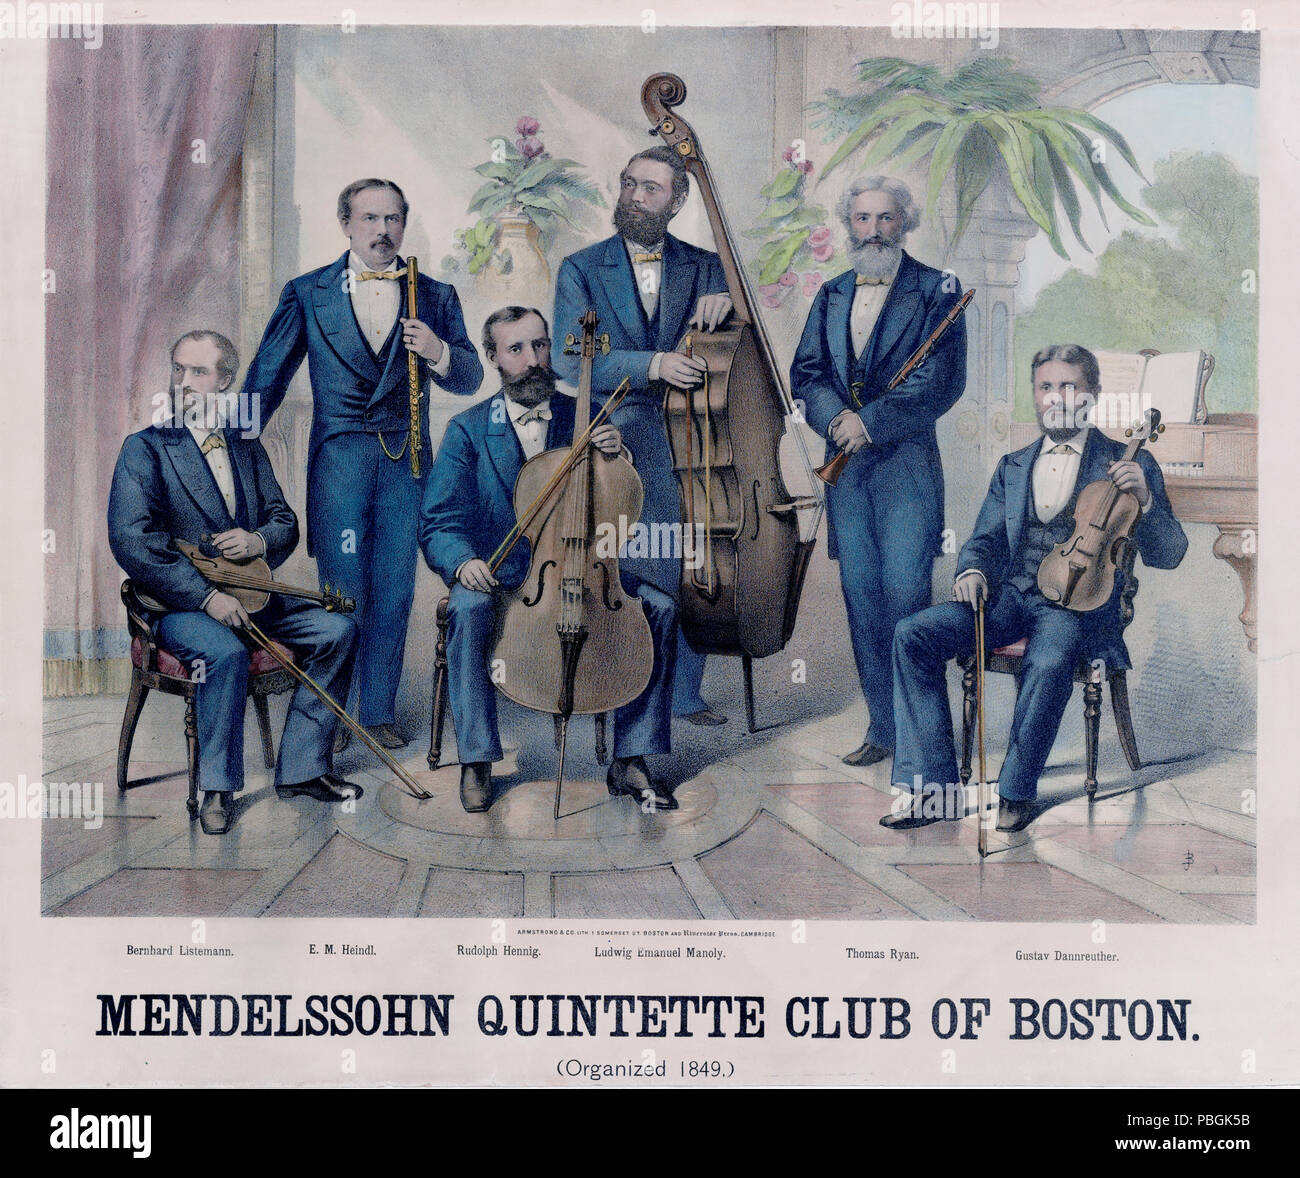 Mendelssohn Quintette Club of Boston with  instruments; shown are, from left, Bernhard Listemann, E.M. Heindl, Rudolph Hennig, Ludwig Emanuel Manoly, Thomas Ryan, and Gustav Dannreuther. 1878-79 Stock Photo